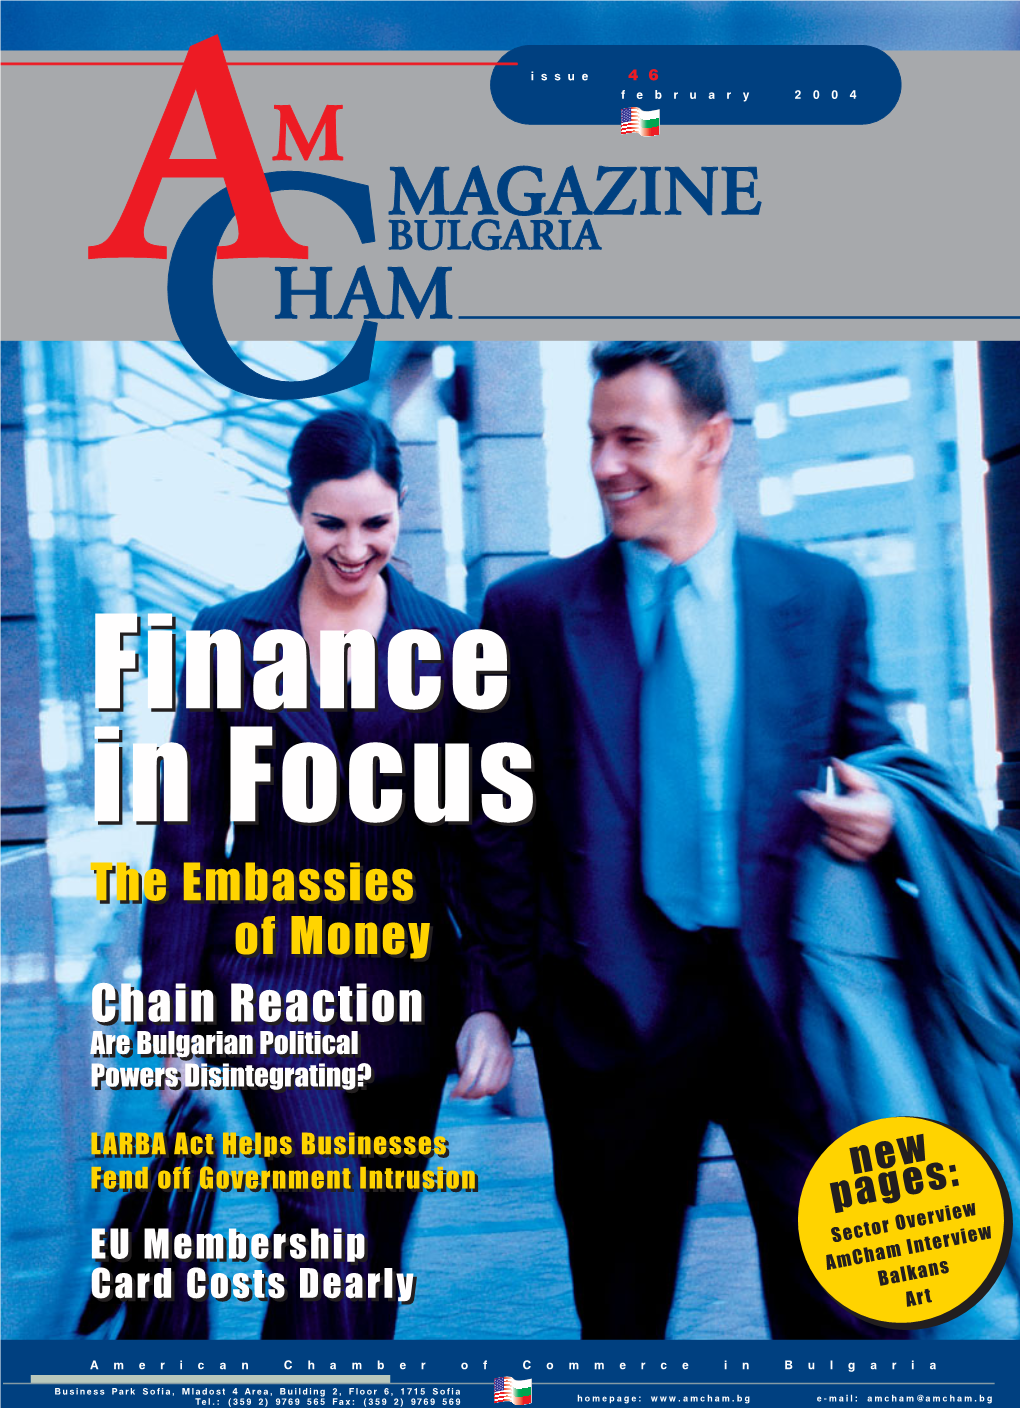 Issue-46-February-2004.Pdf